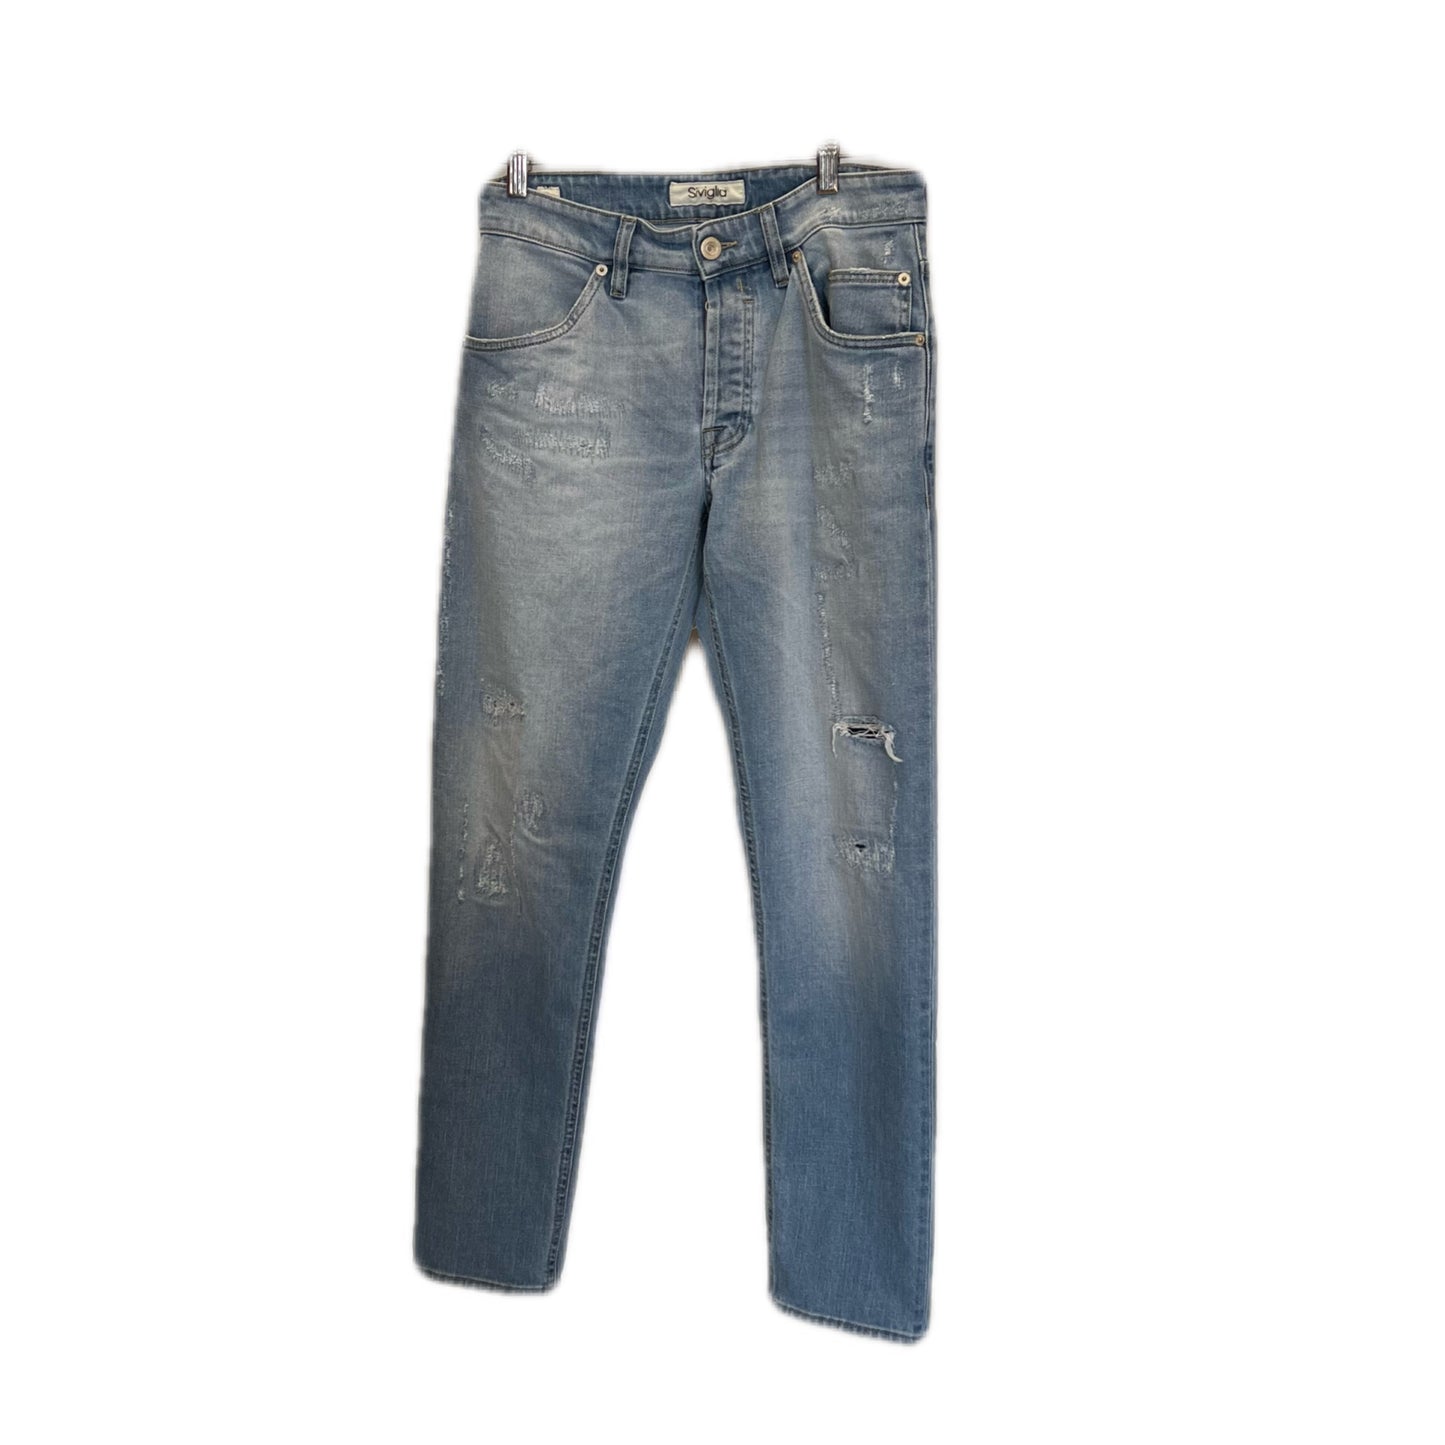 Siviglia - Jeans 5 Pockets Tapared Fit